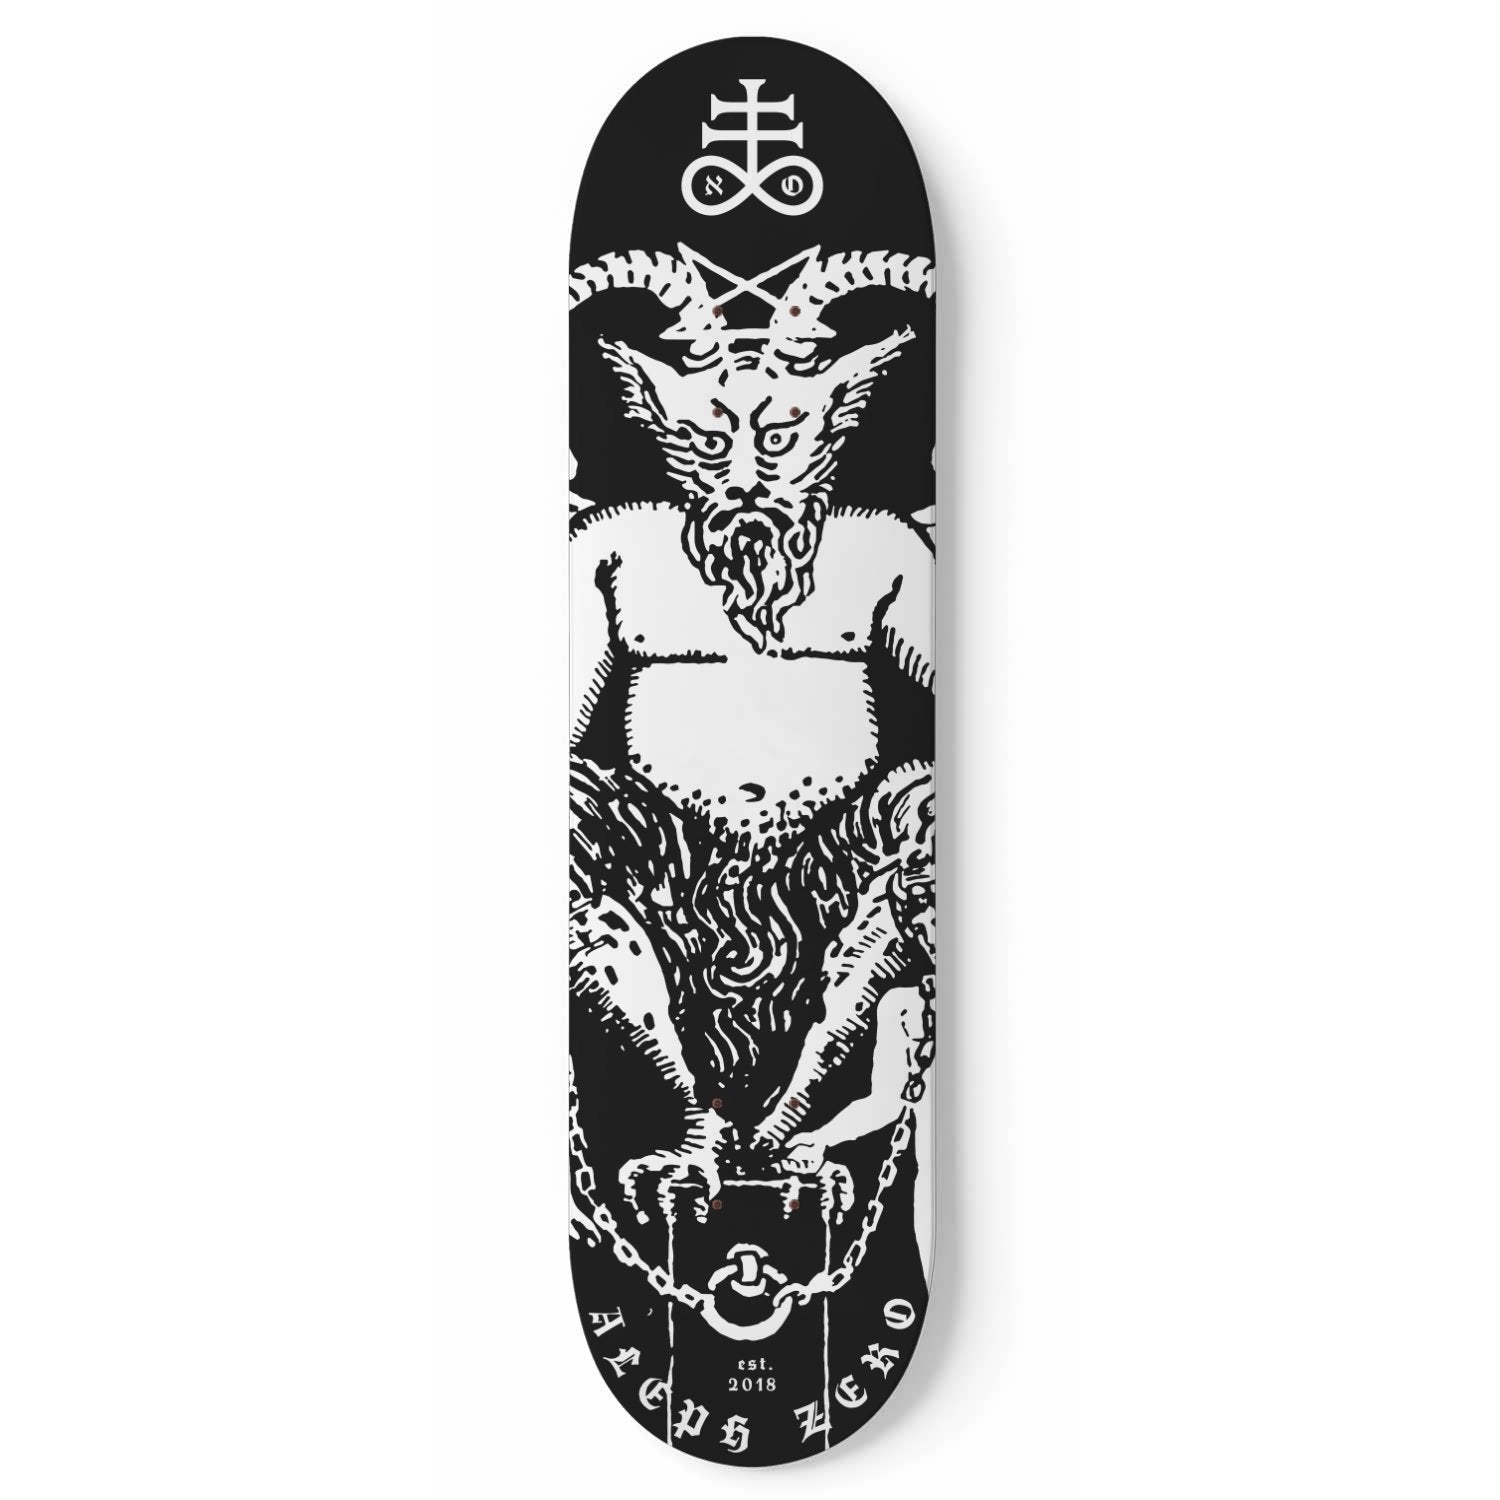 The Devil skateboard deck wall art